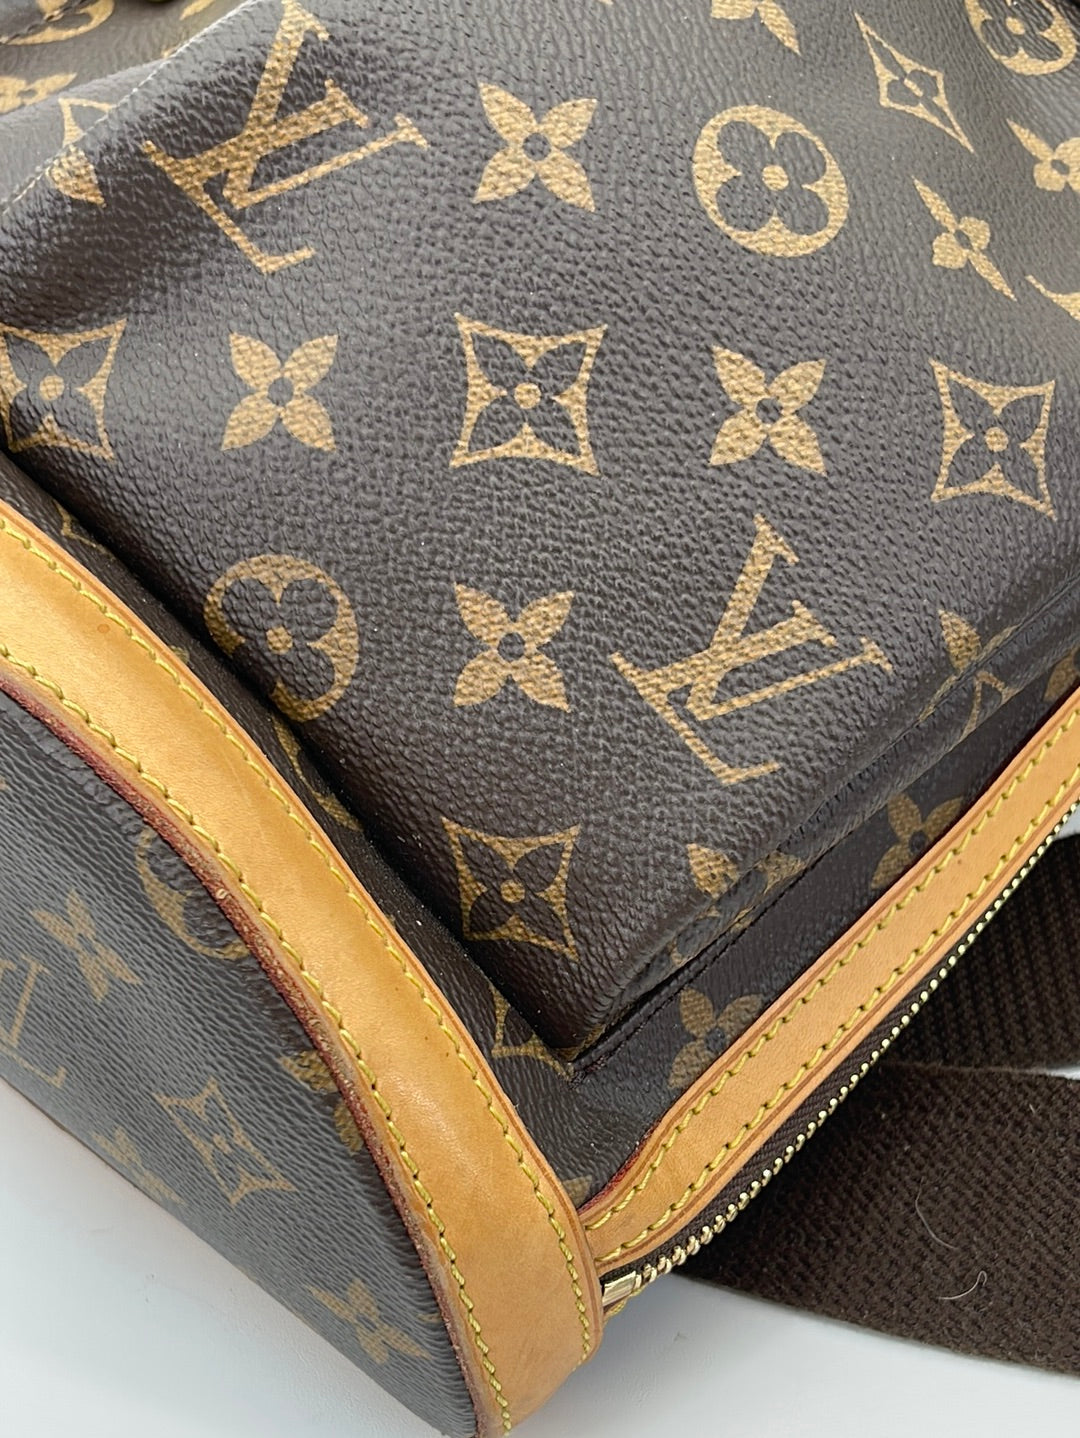 Louis Vuitton Bosphore backpack - € 1.200,00 - Vendora